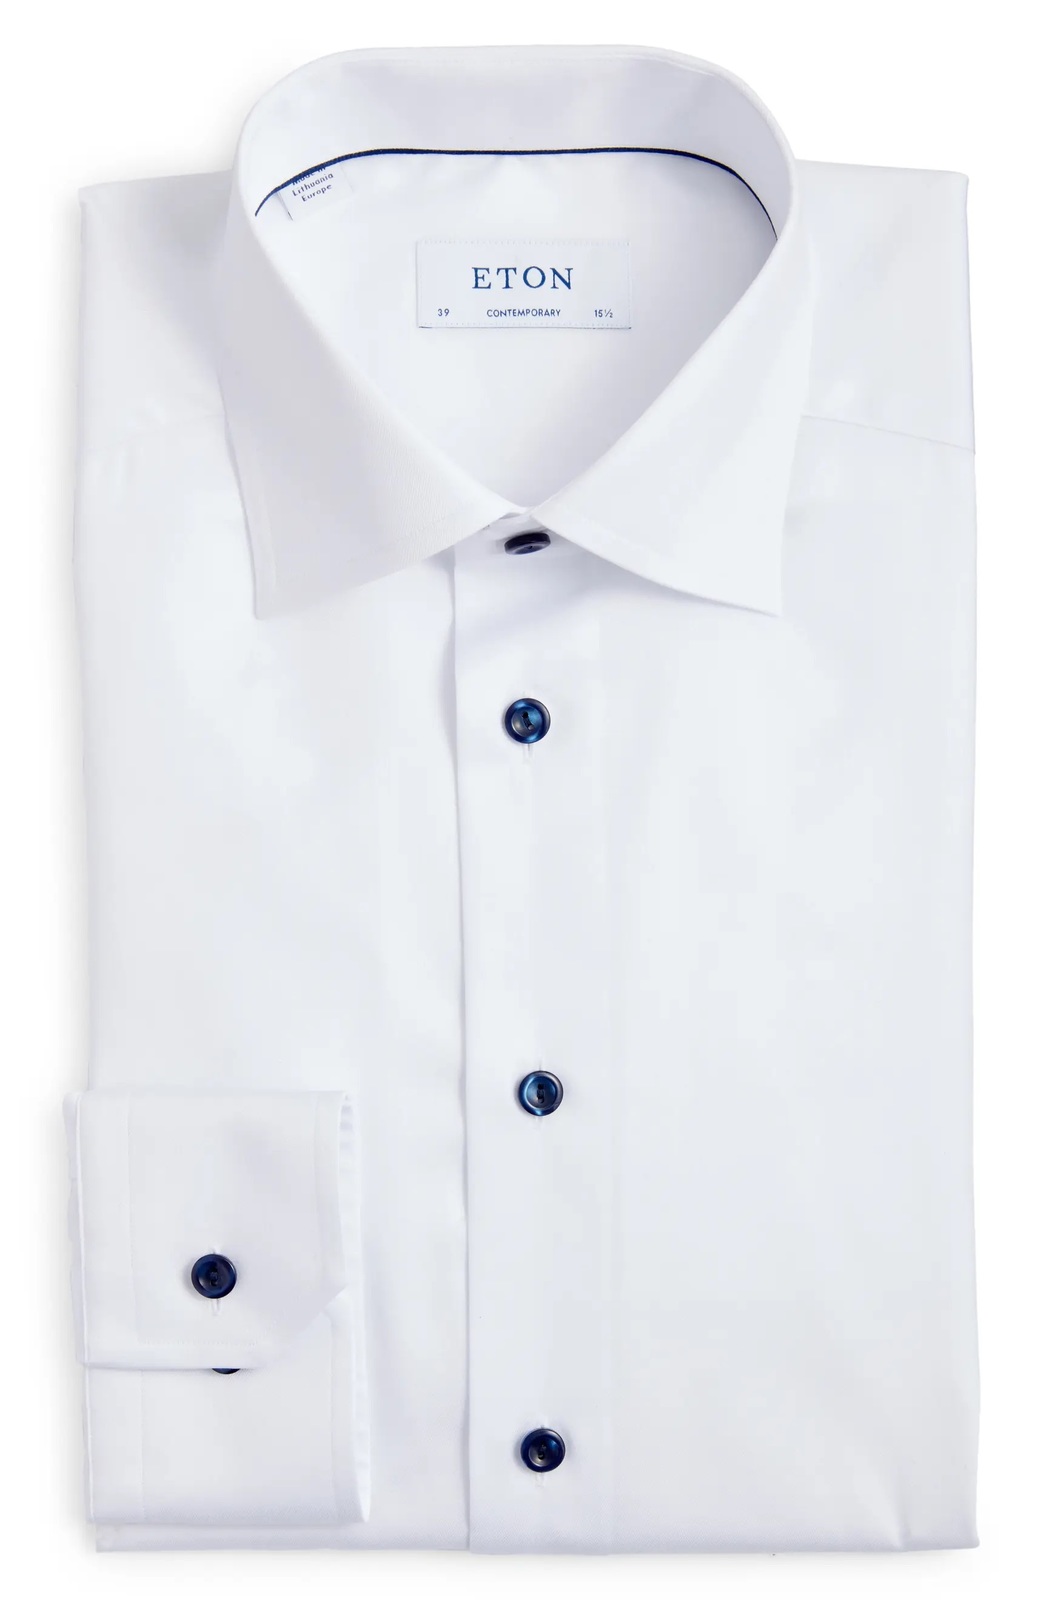 Thomas Pink John Varvatos Mens Blue Striped Collar Dress Shirt Size 16.5 M Lot 2